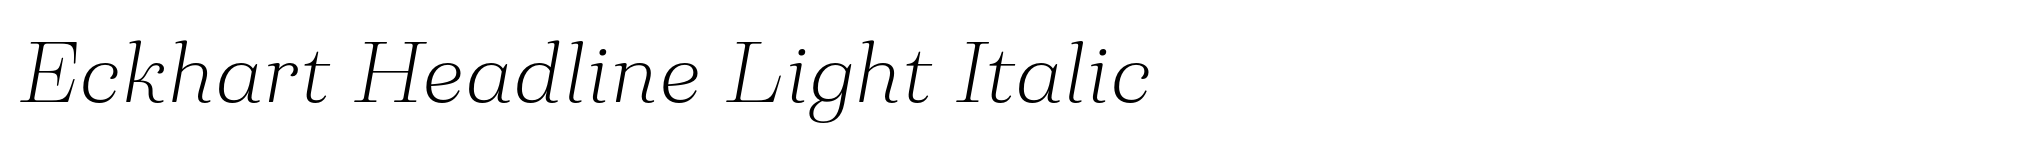 Eckhart Headline Light Italic image